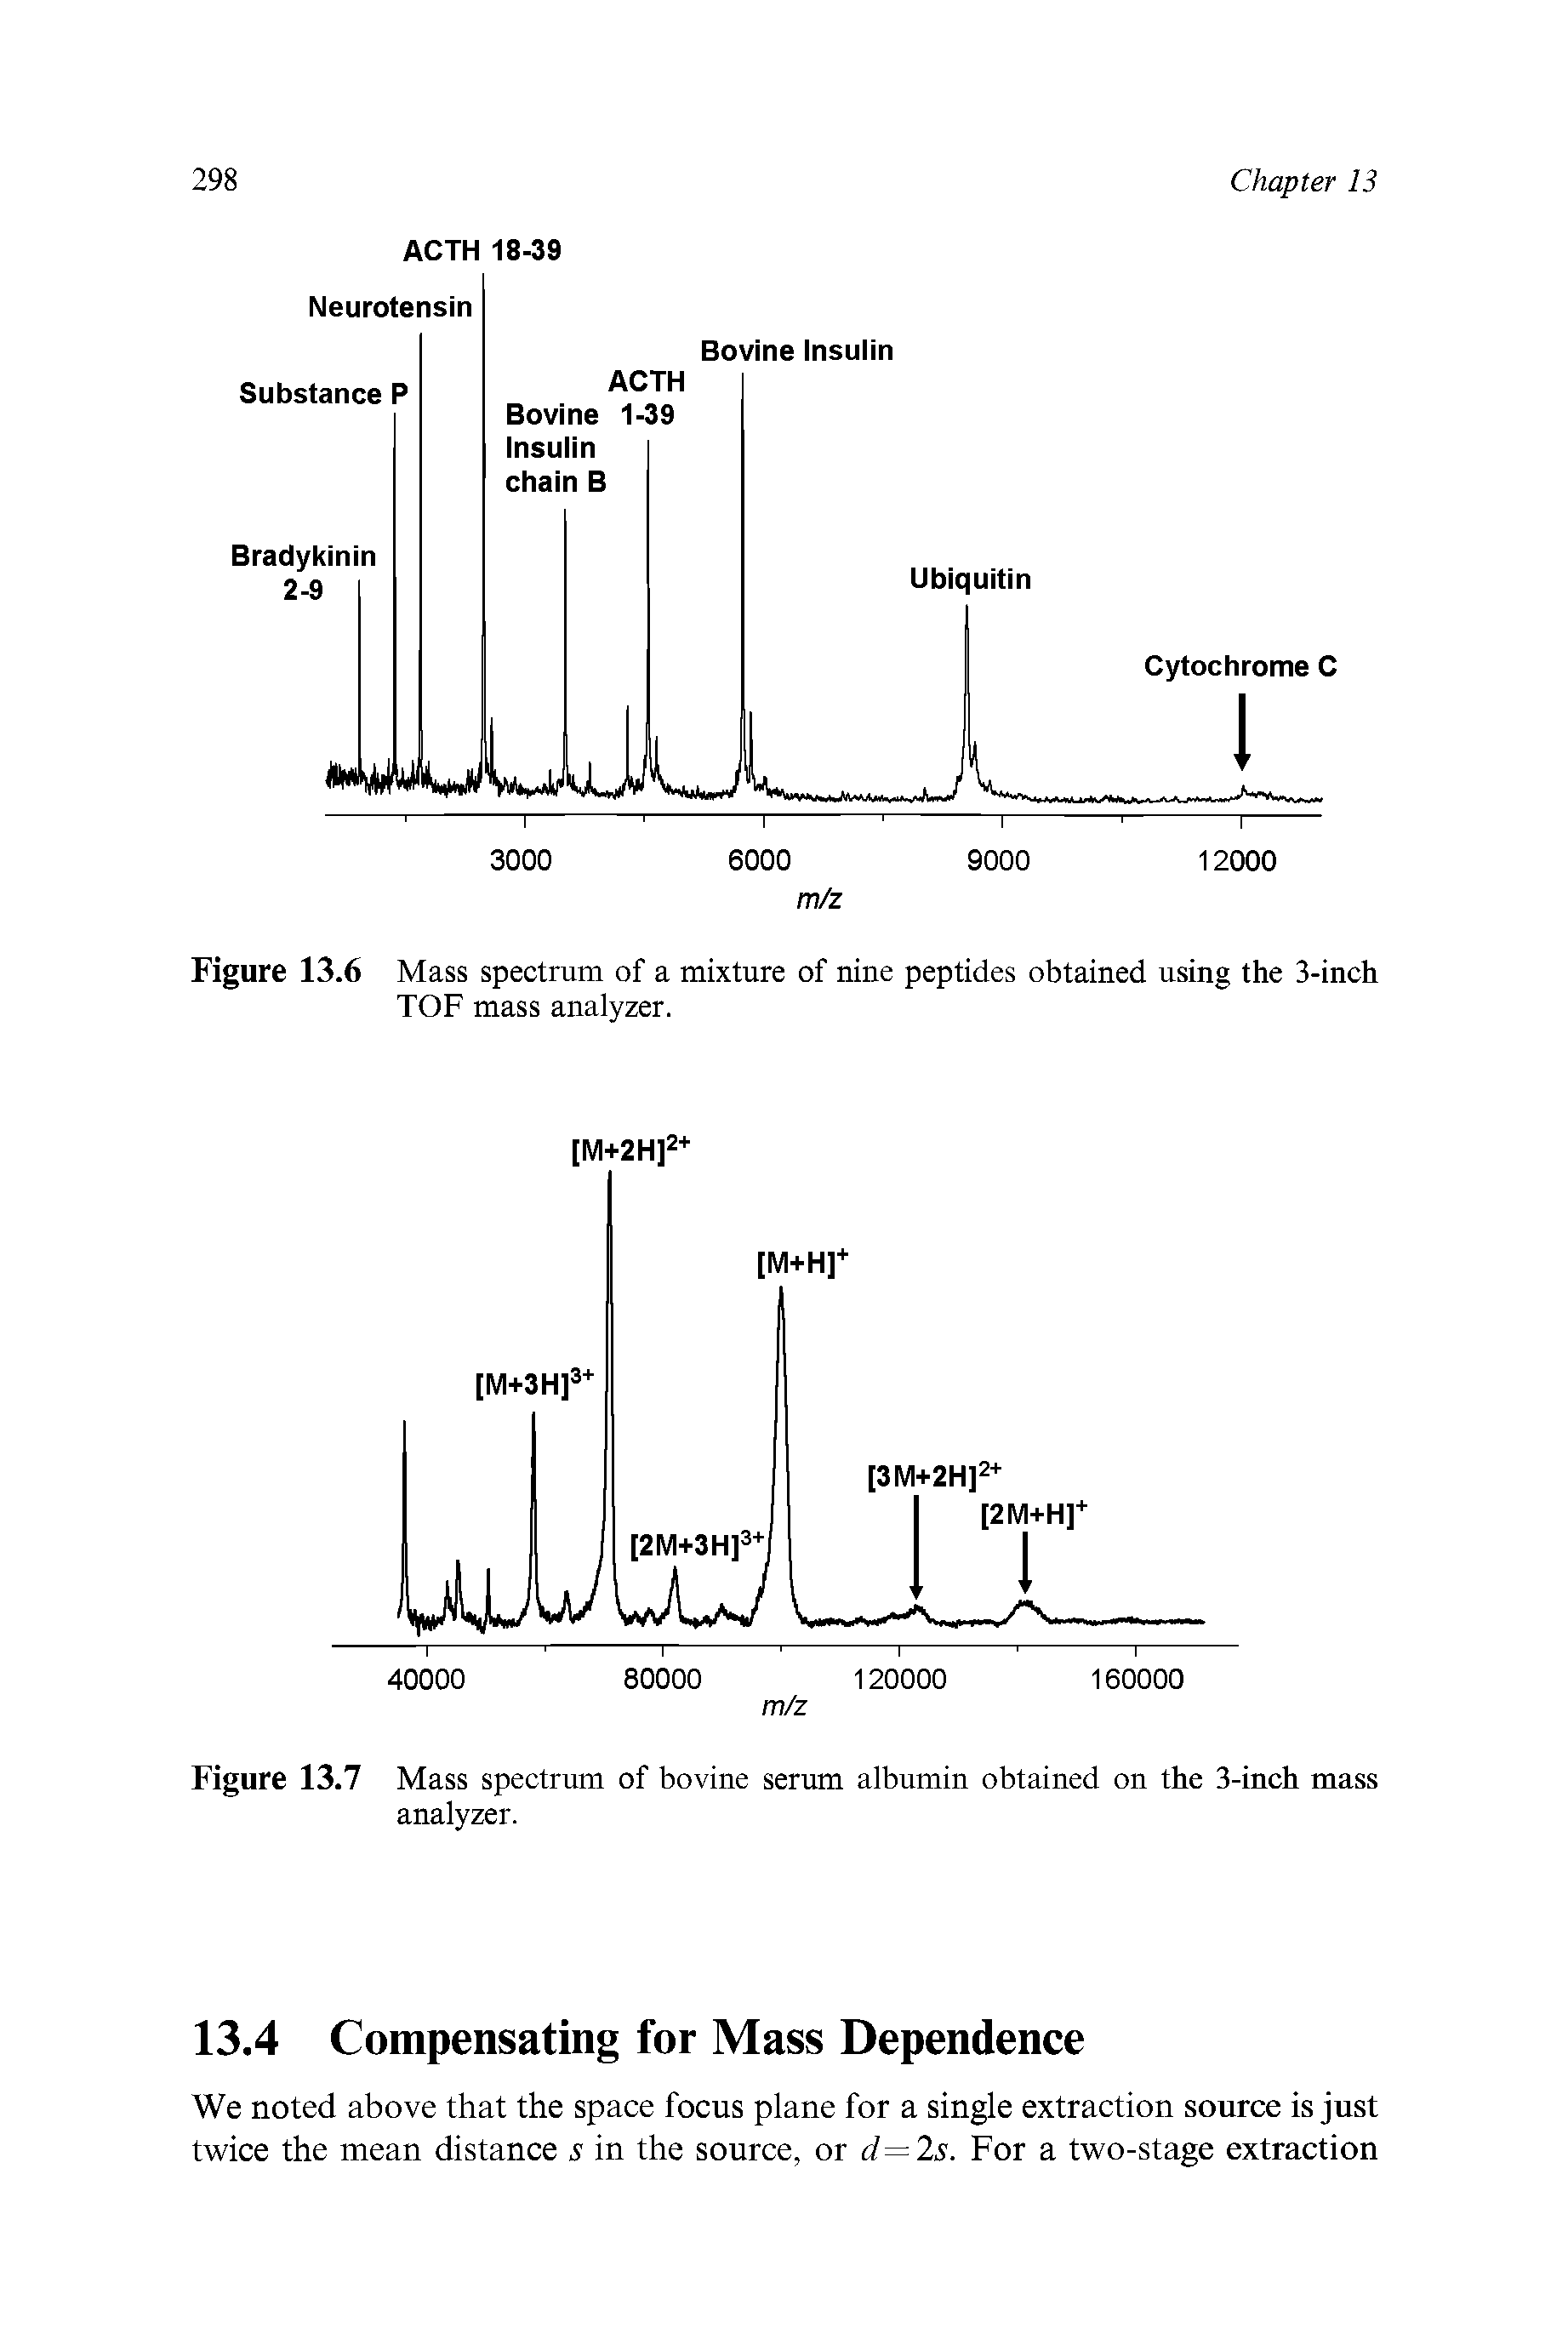 Figure 13.7 Mass spectrum of bovine serum albumin obtained on the 3-inch mass analyzer.